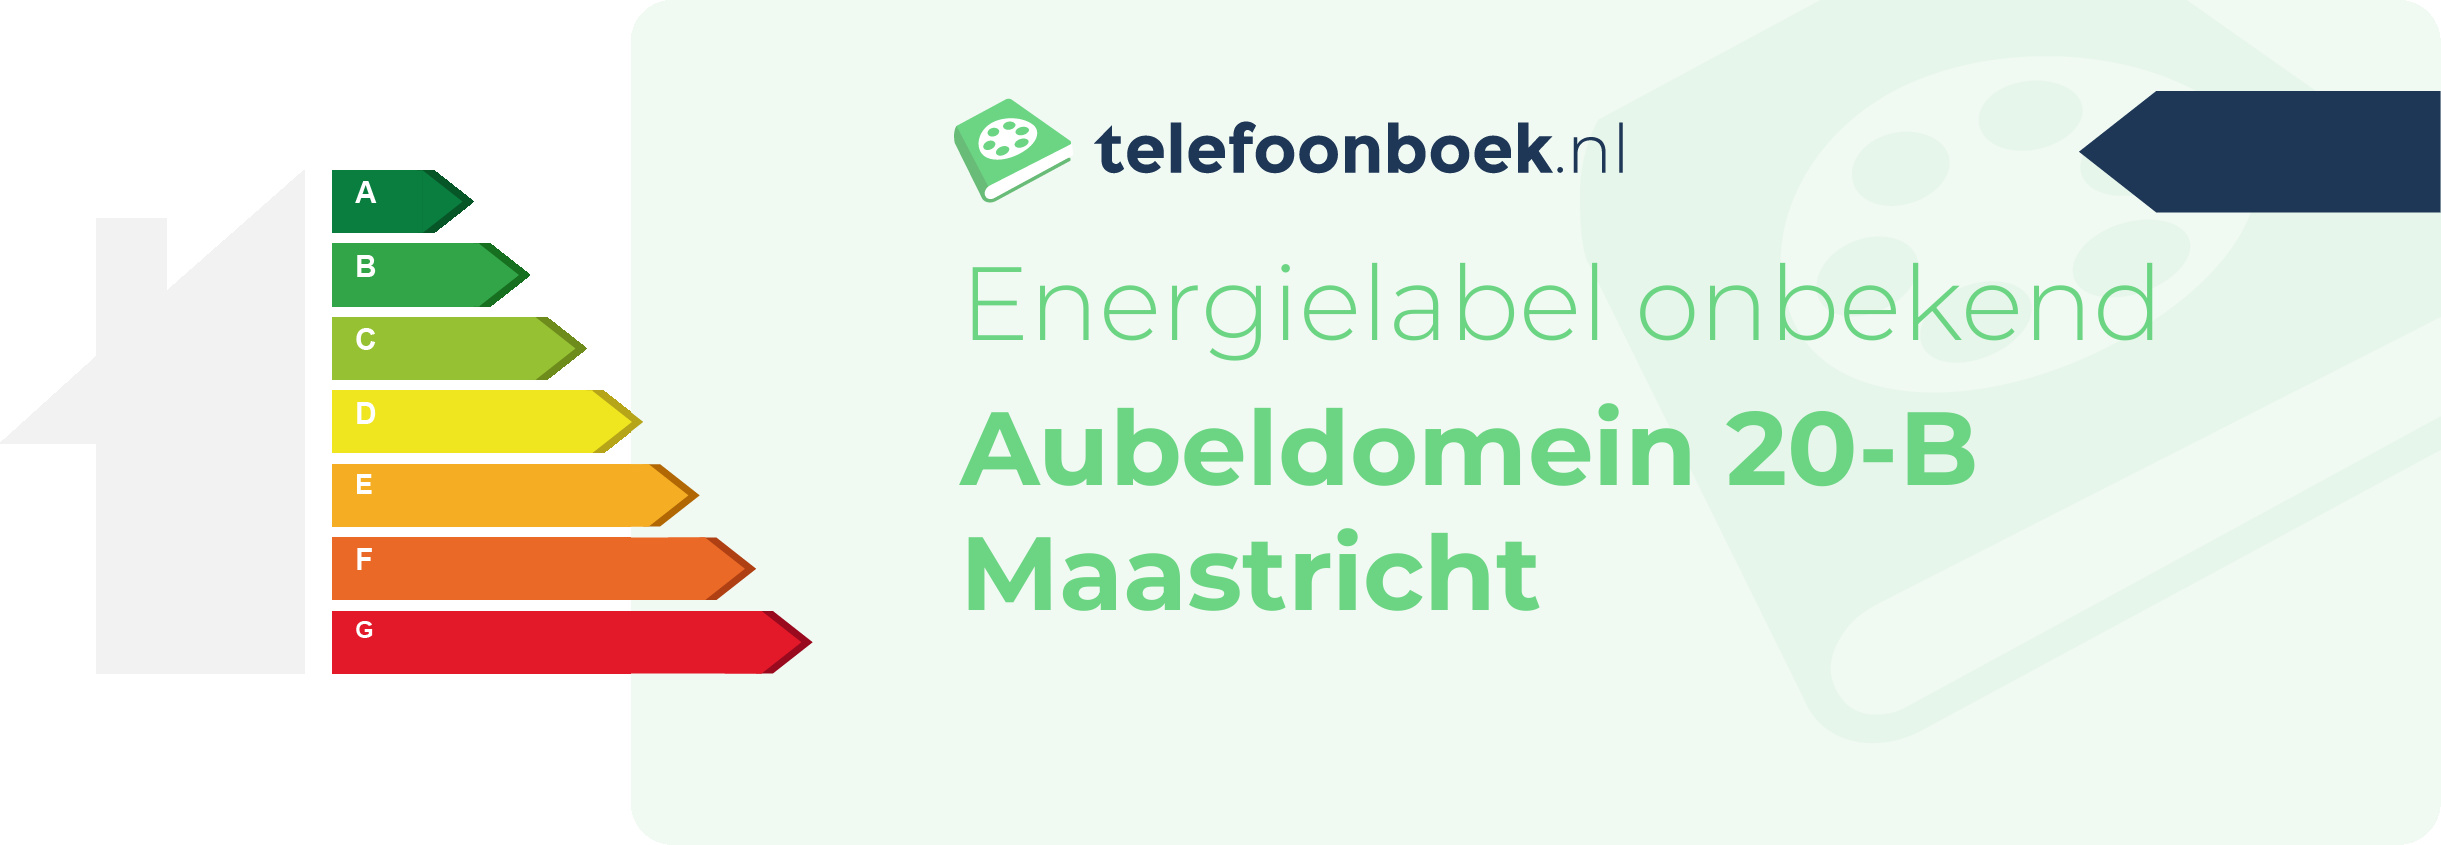 Energielabel Aubeldomein 20-B Maastricht